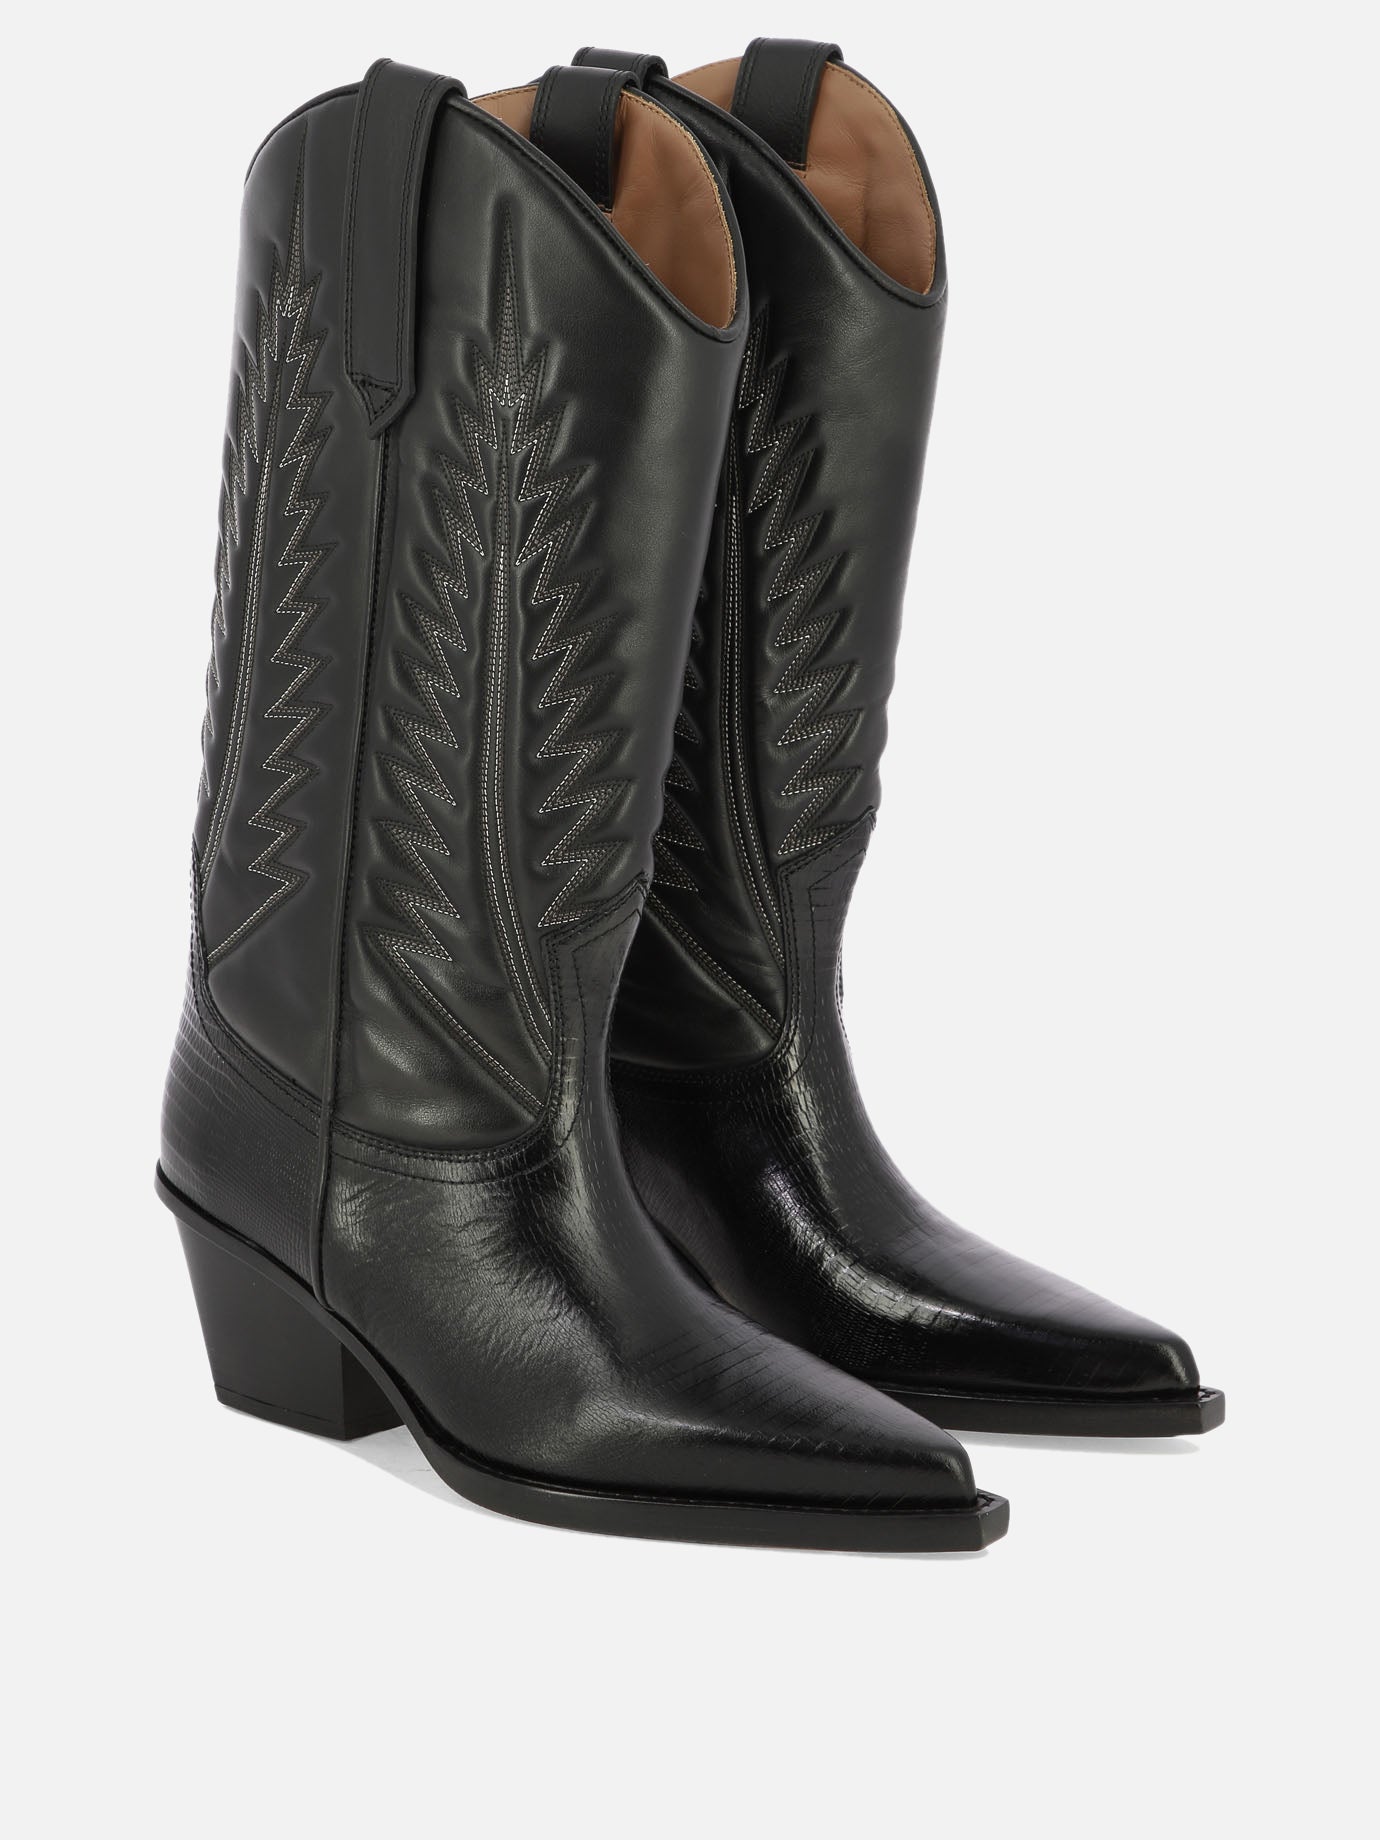 "Rosario" boots